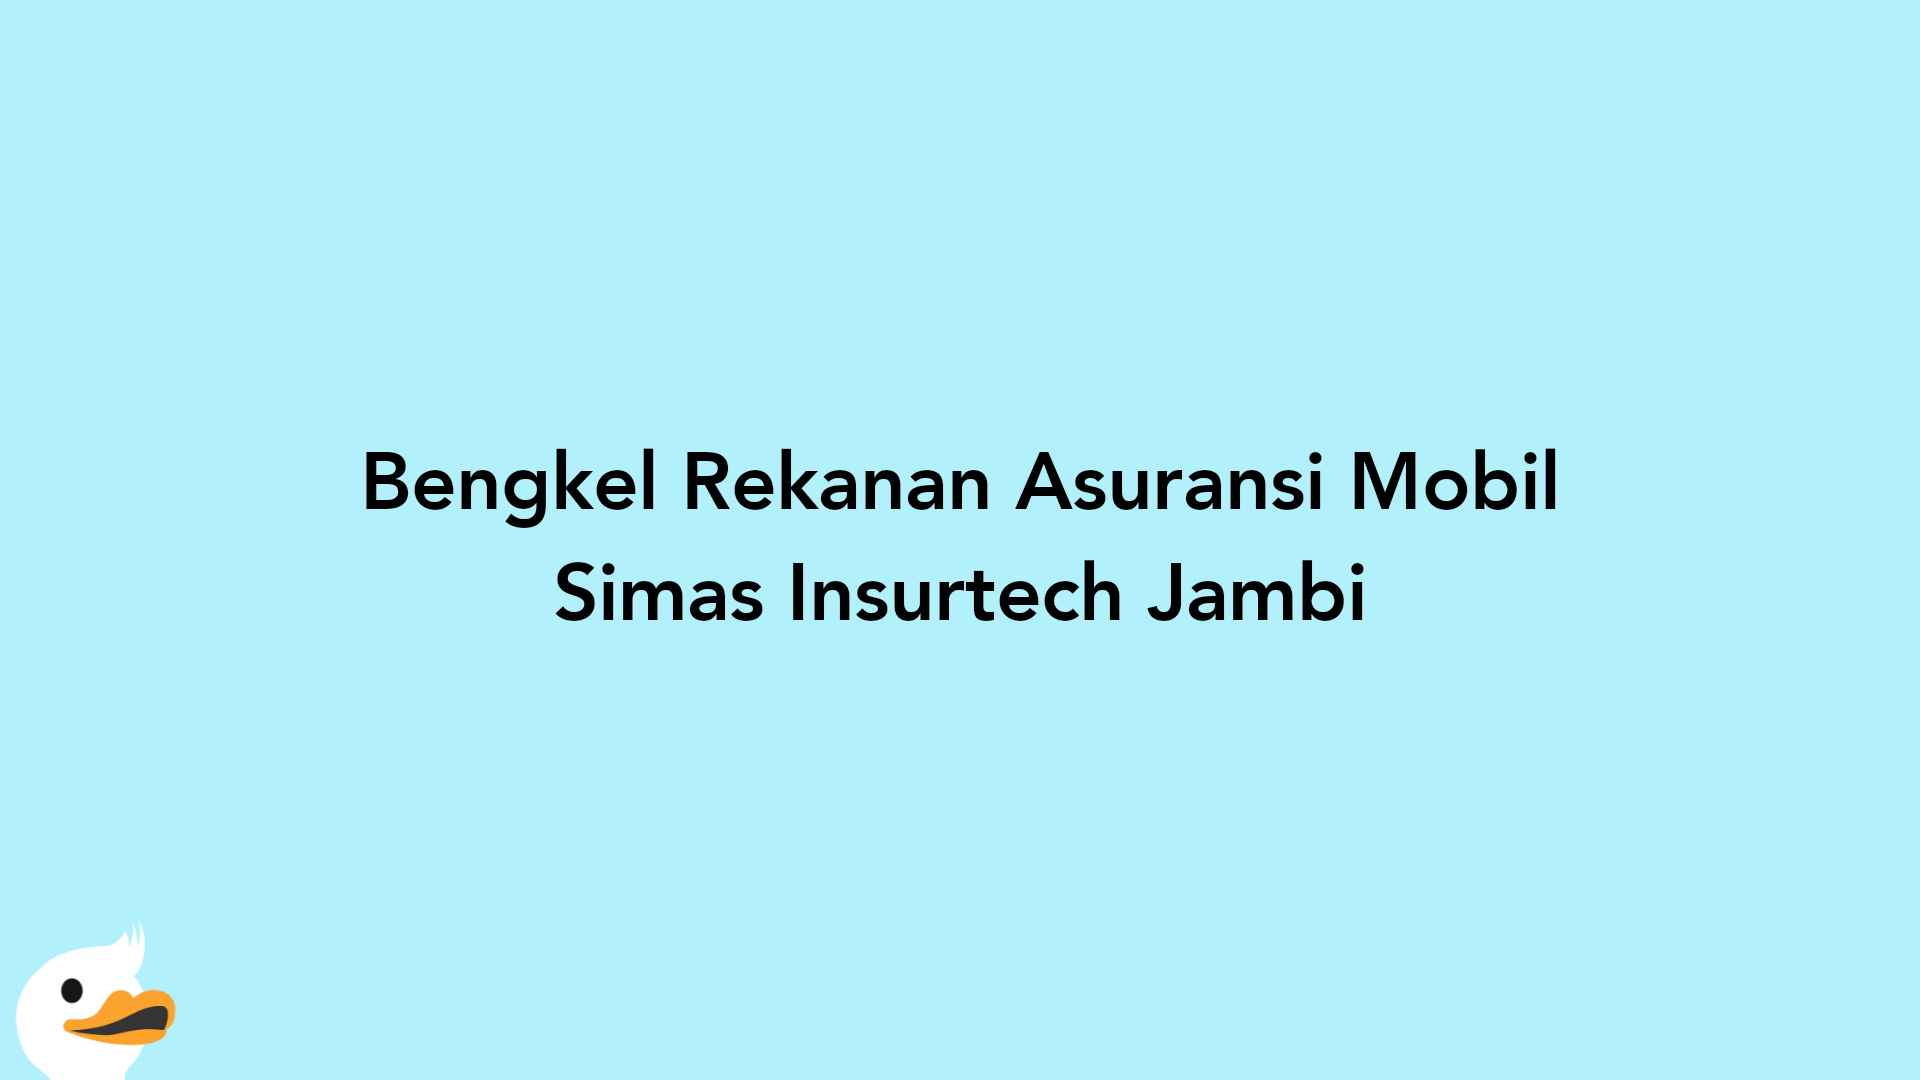 Bengkel Rekanan Asuransi Mobil Simas Insurtech Jambi